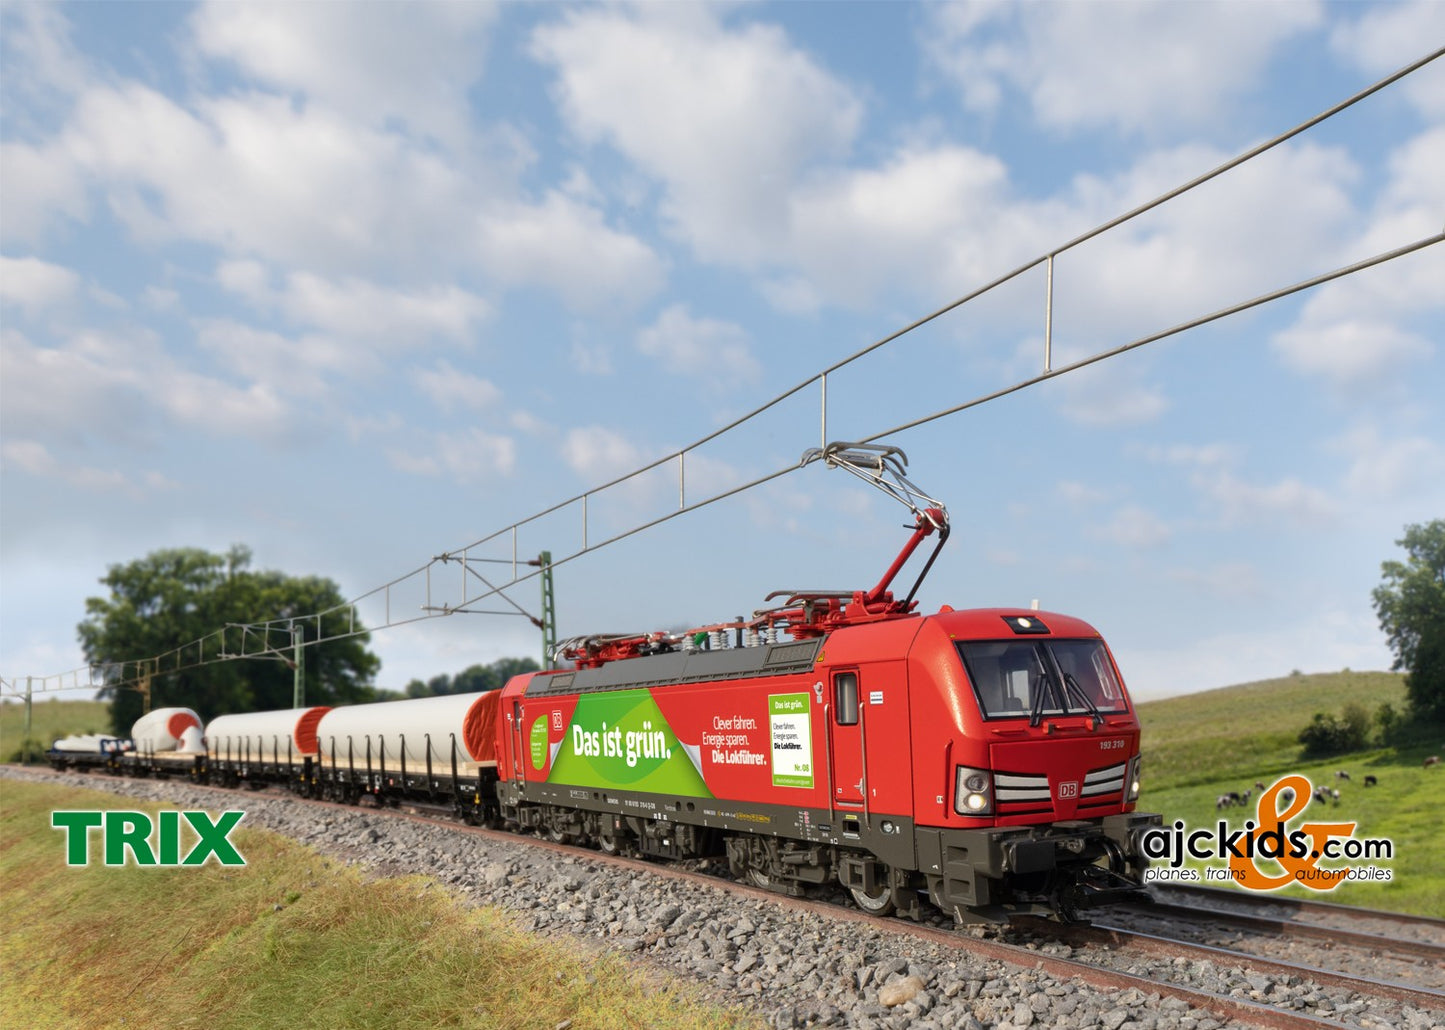 Trix 25190 - Class 193 Electric Locomotive "das ist grün"